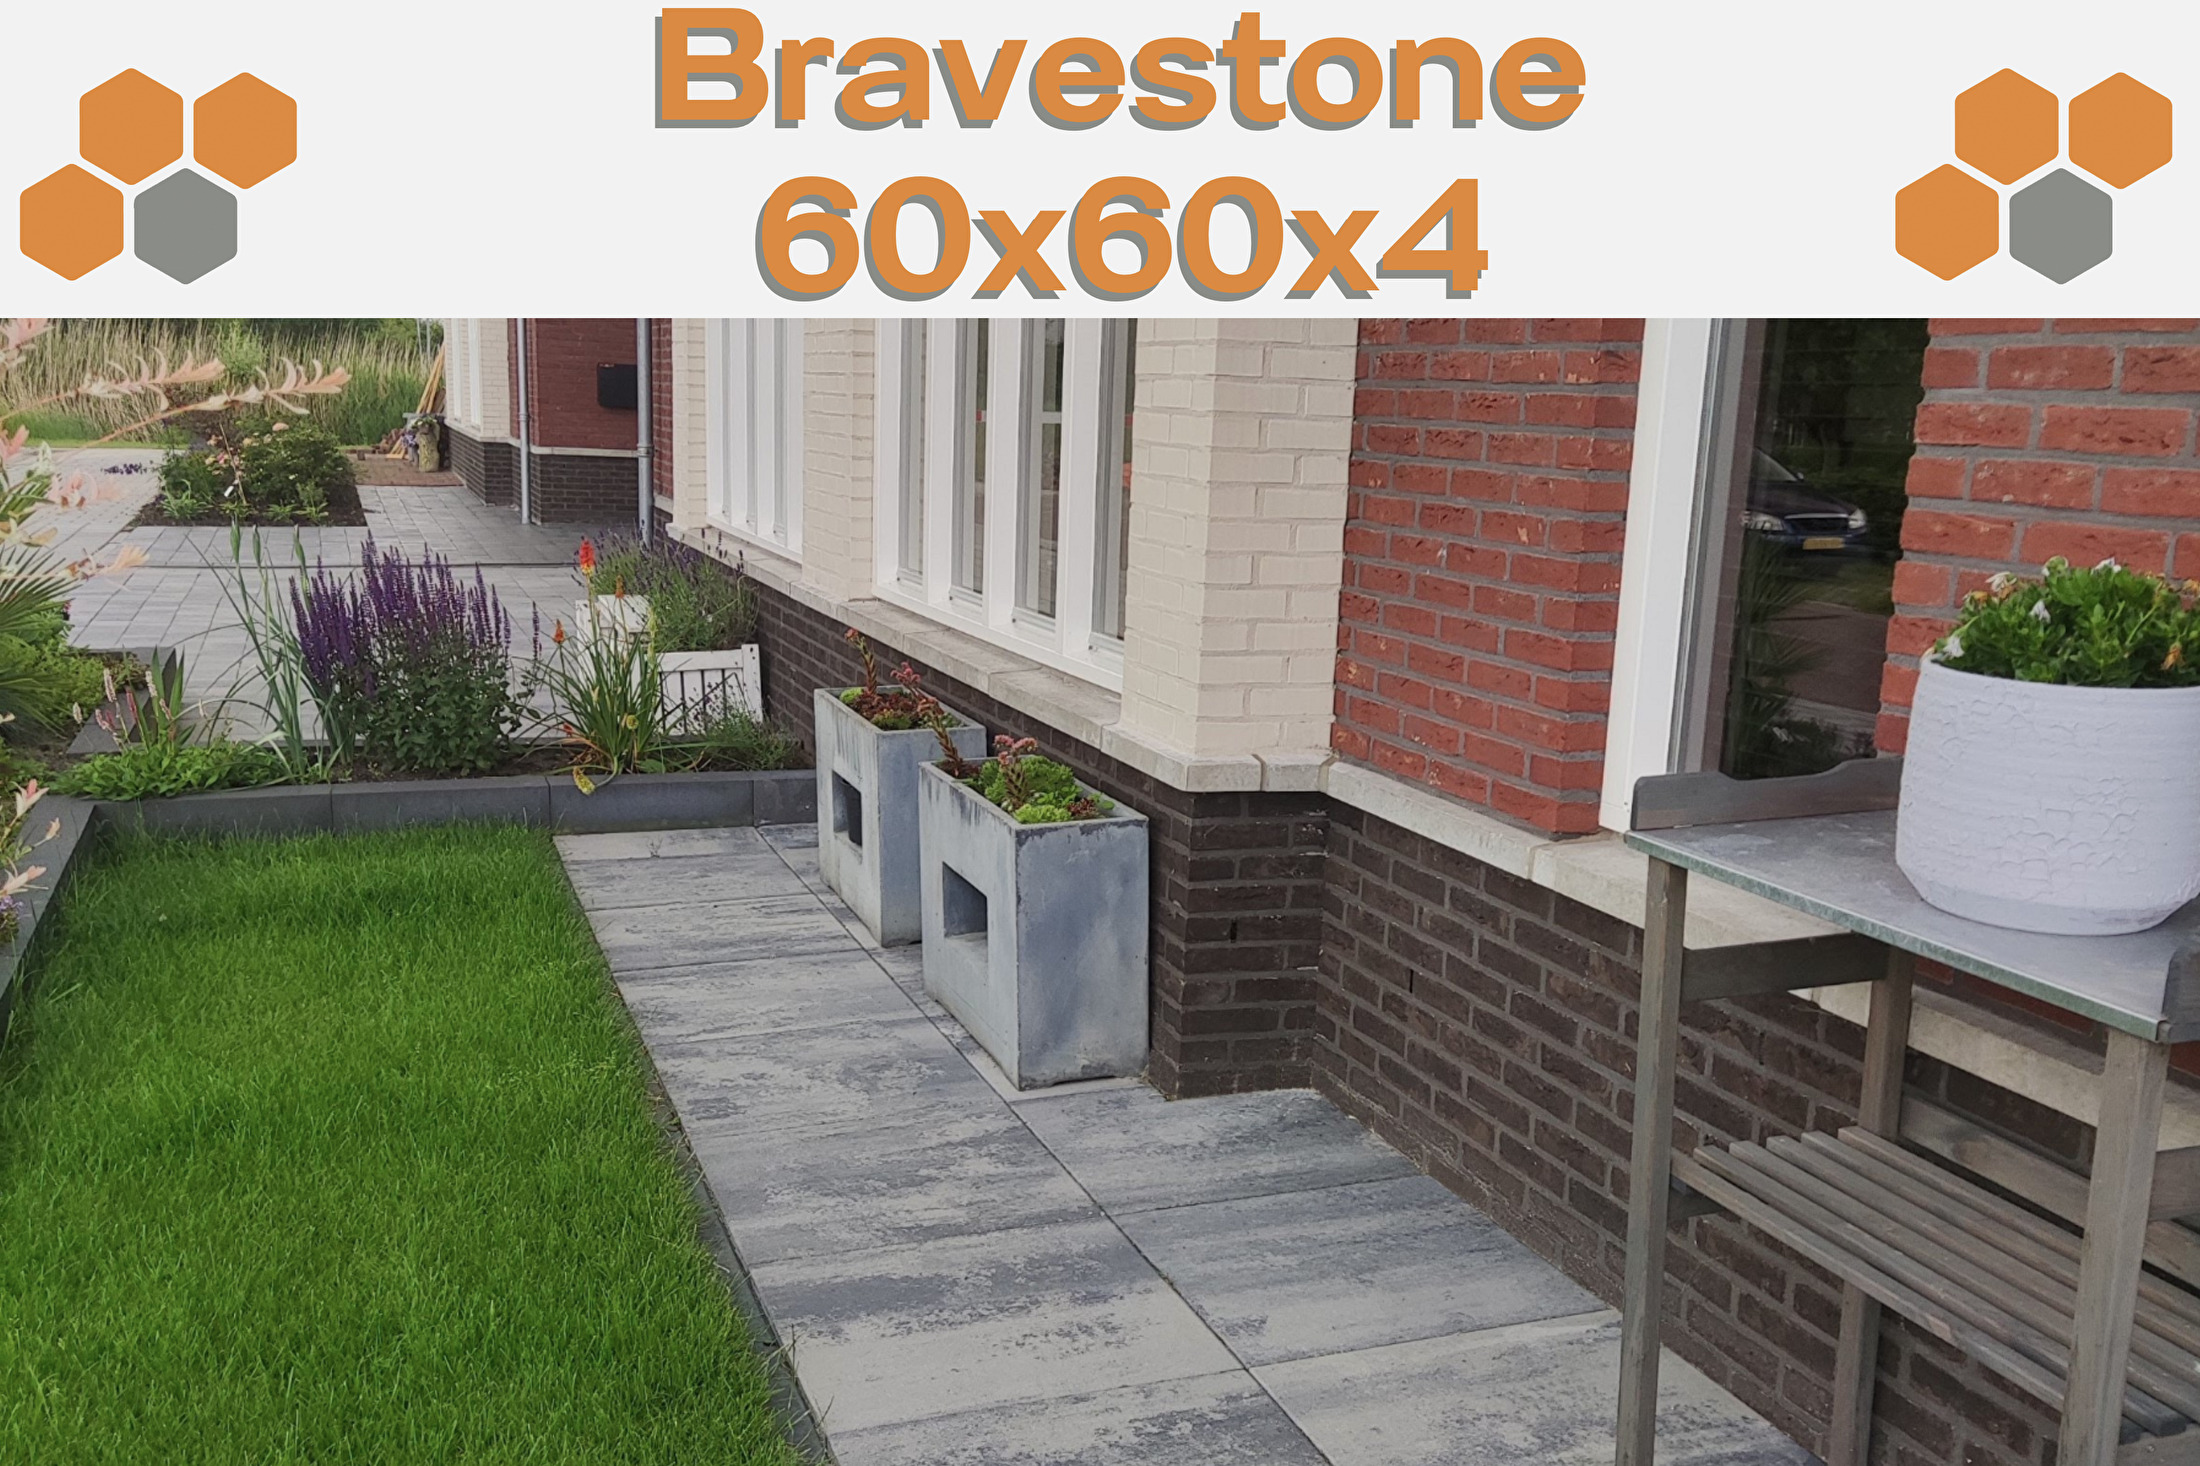 Bravestone 60x60x4